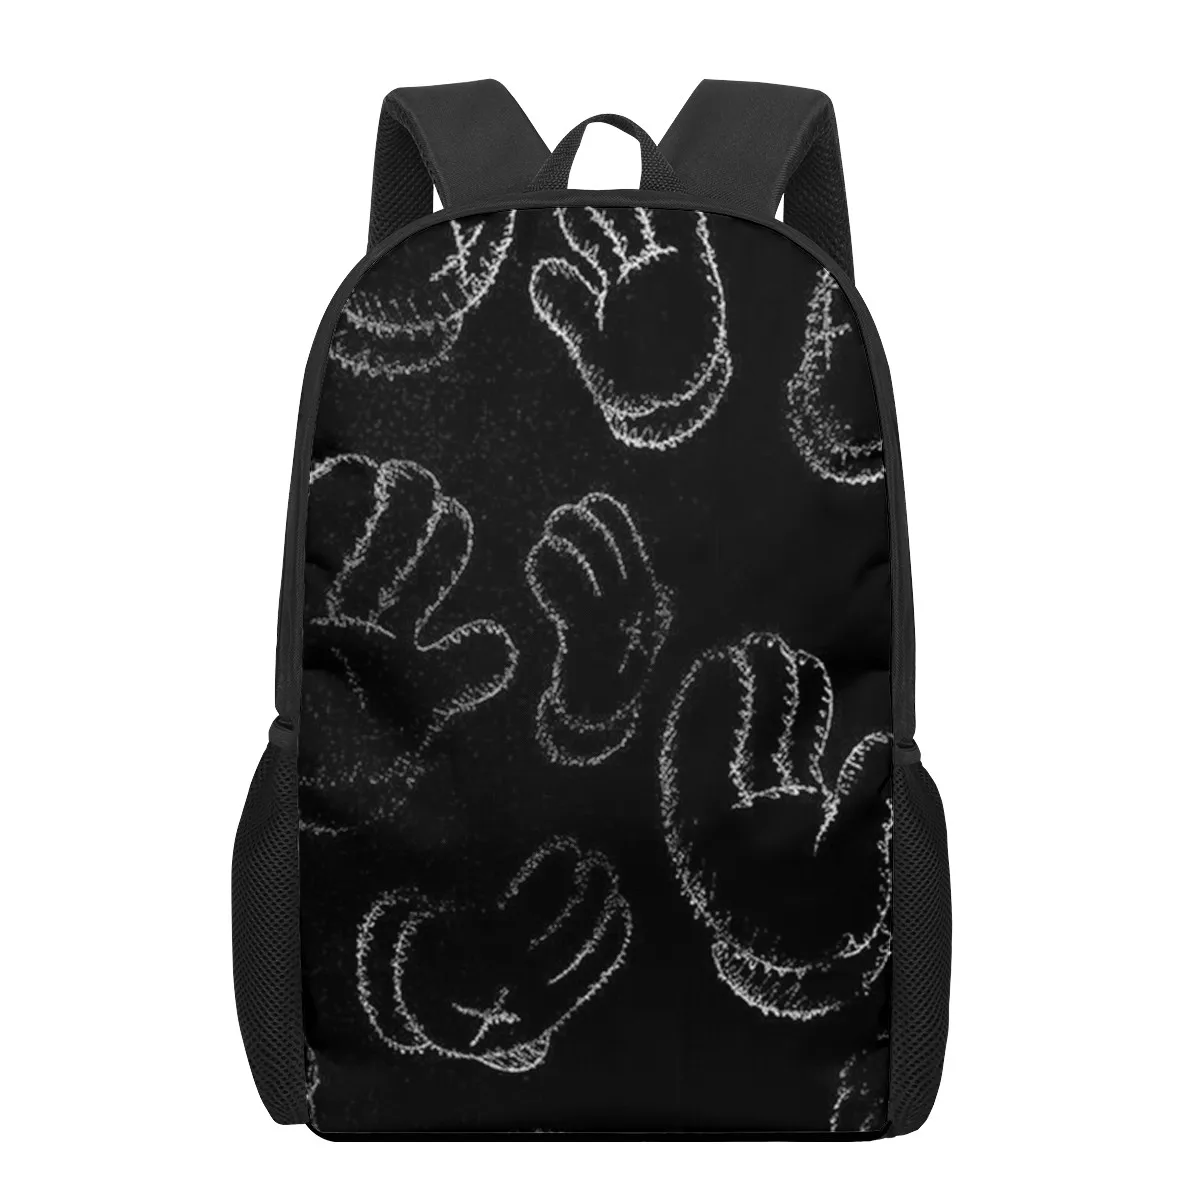 trend brand kaw painting 3D Pattern School Bag for Children Girls Boys Casual Book Bags Kids Backpack Boys Girls Schoolbags Bagp